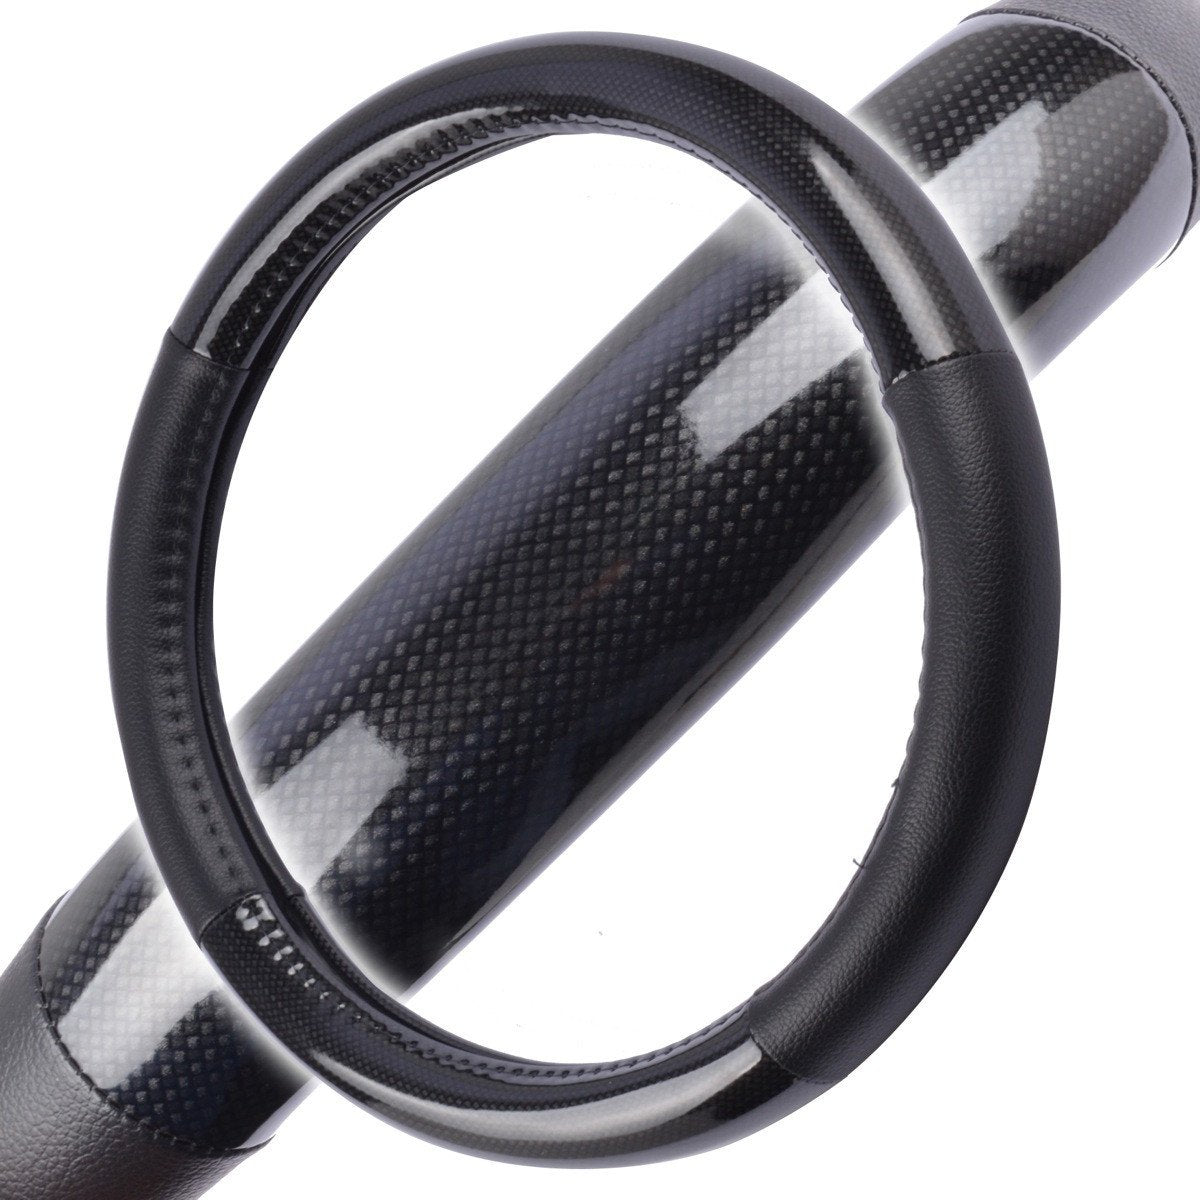 BDK Carbon Fiber Steering Wheel Cover White Vinyl with Fiber Accent - Black Carbon, 14.5 - 15 inch